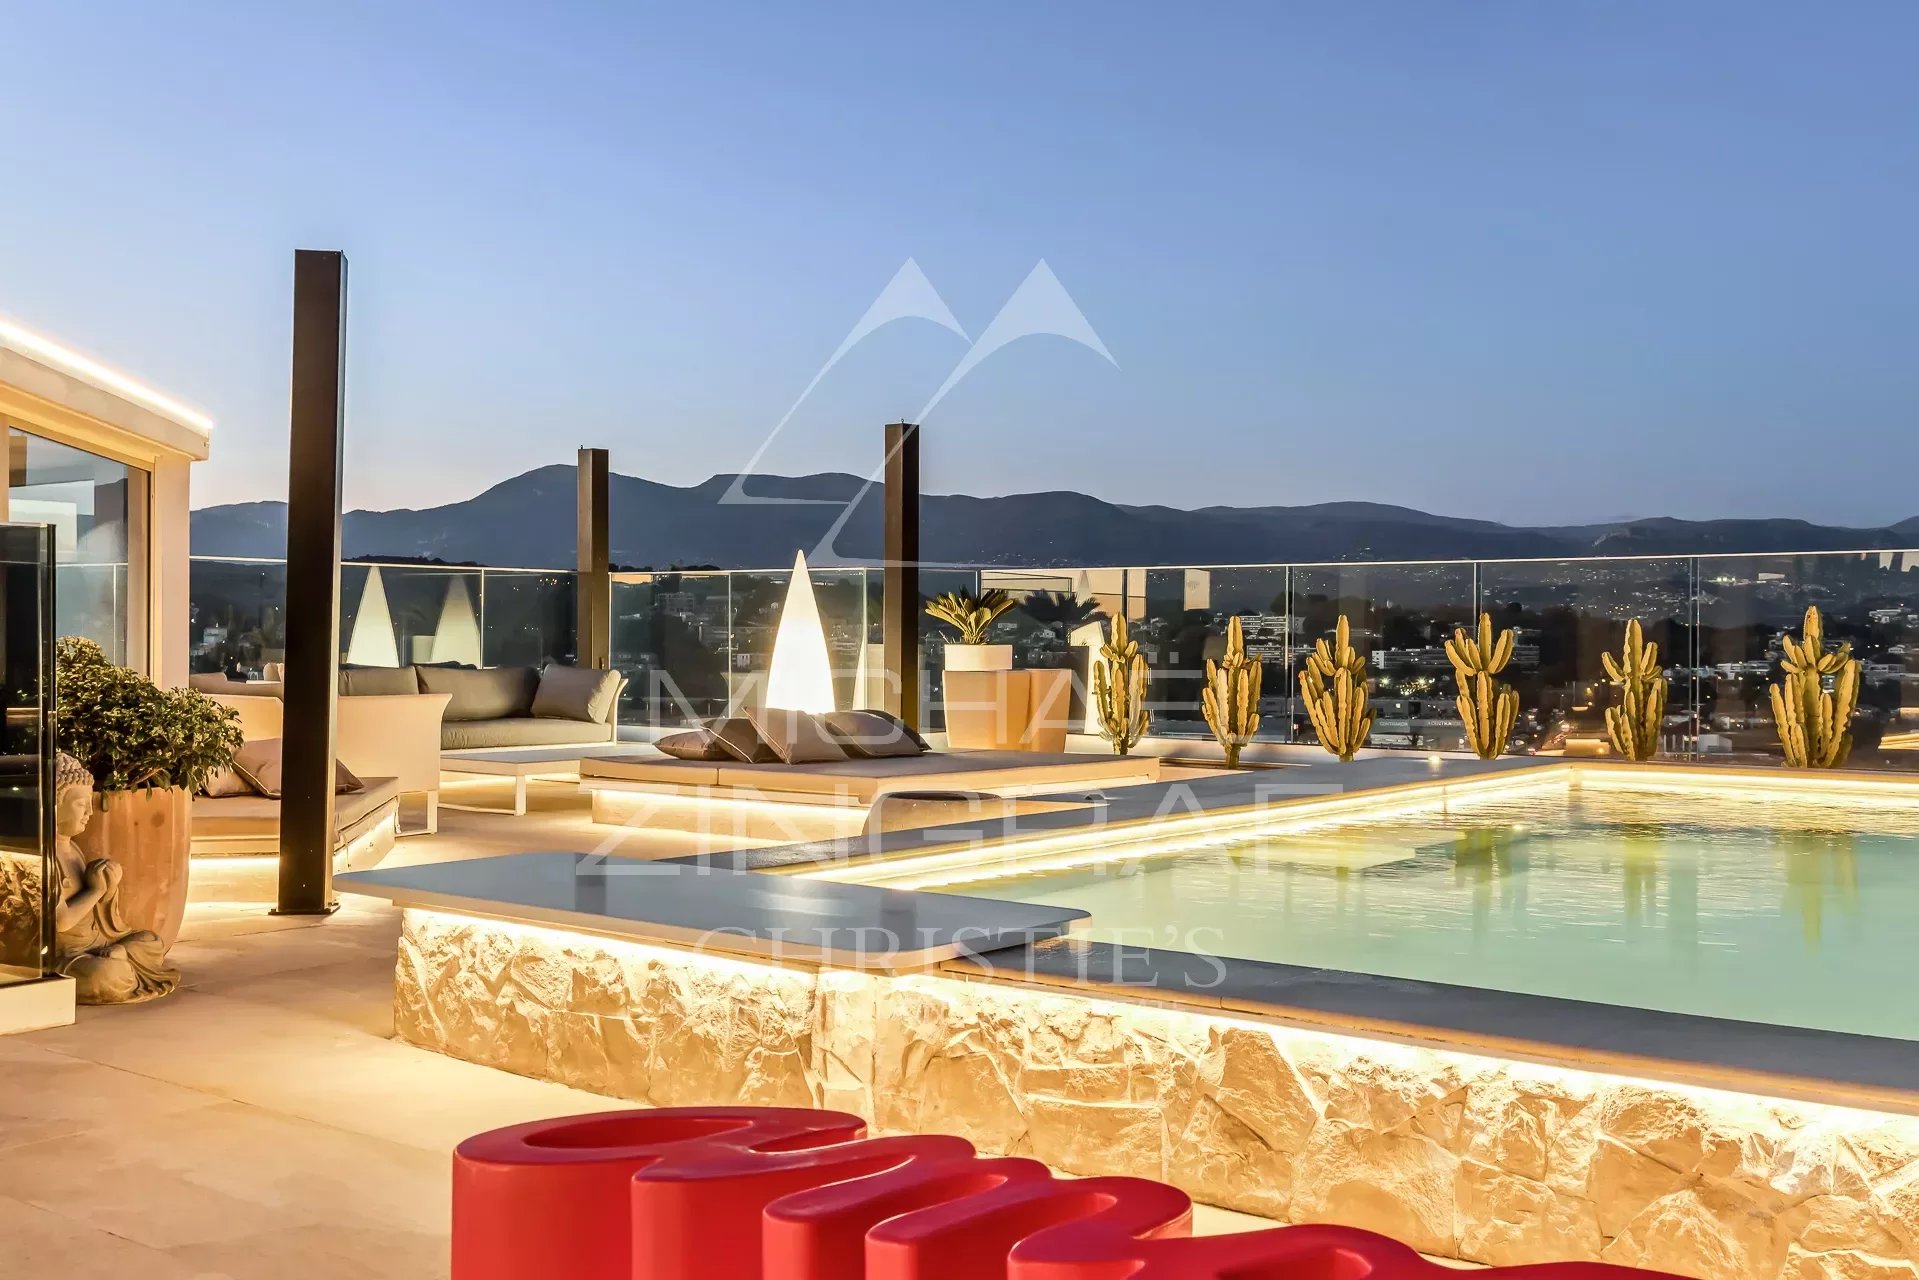 Proche Nice - Superbe triplex avec terrasse et piscine